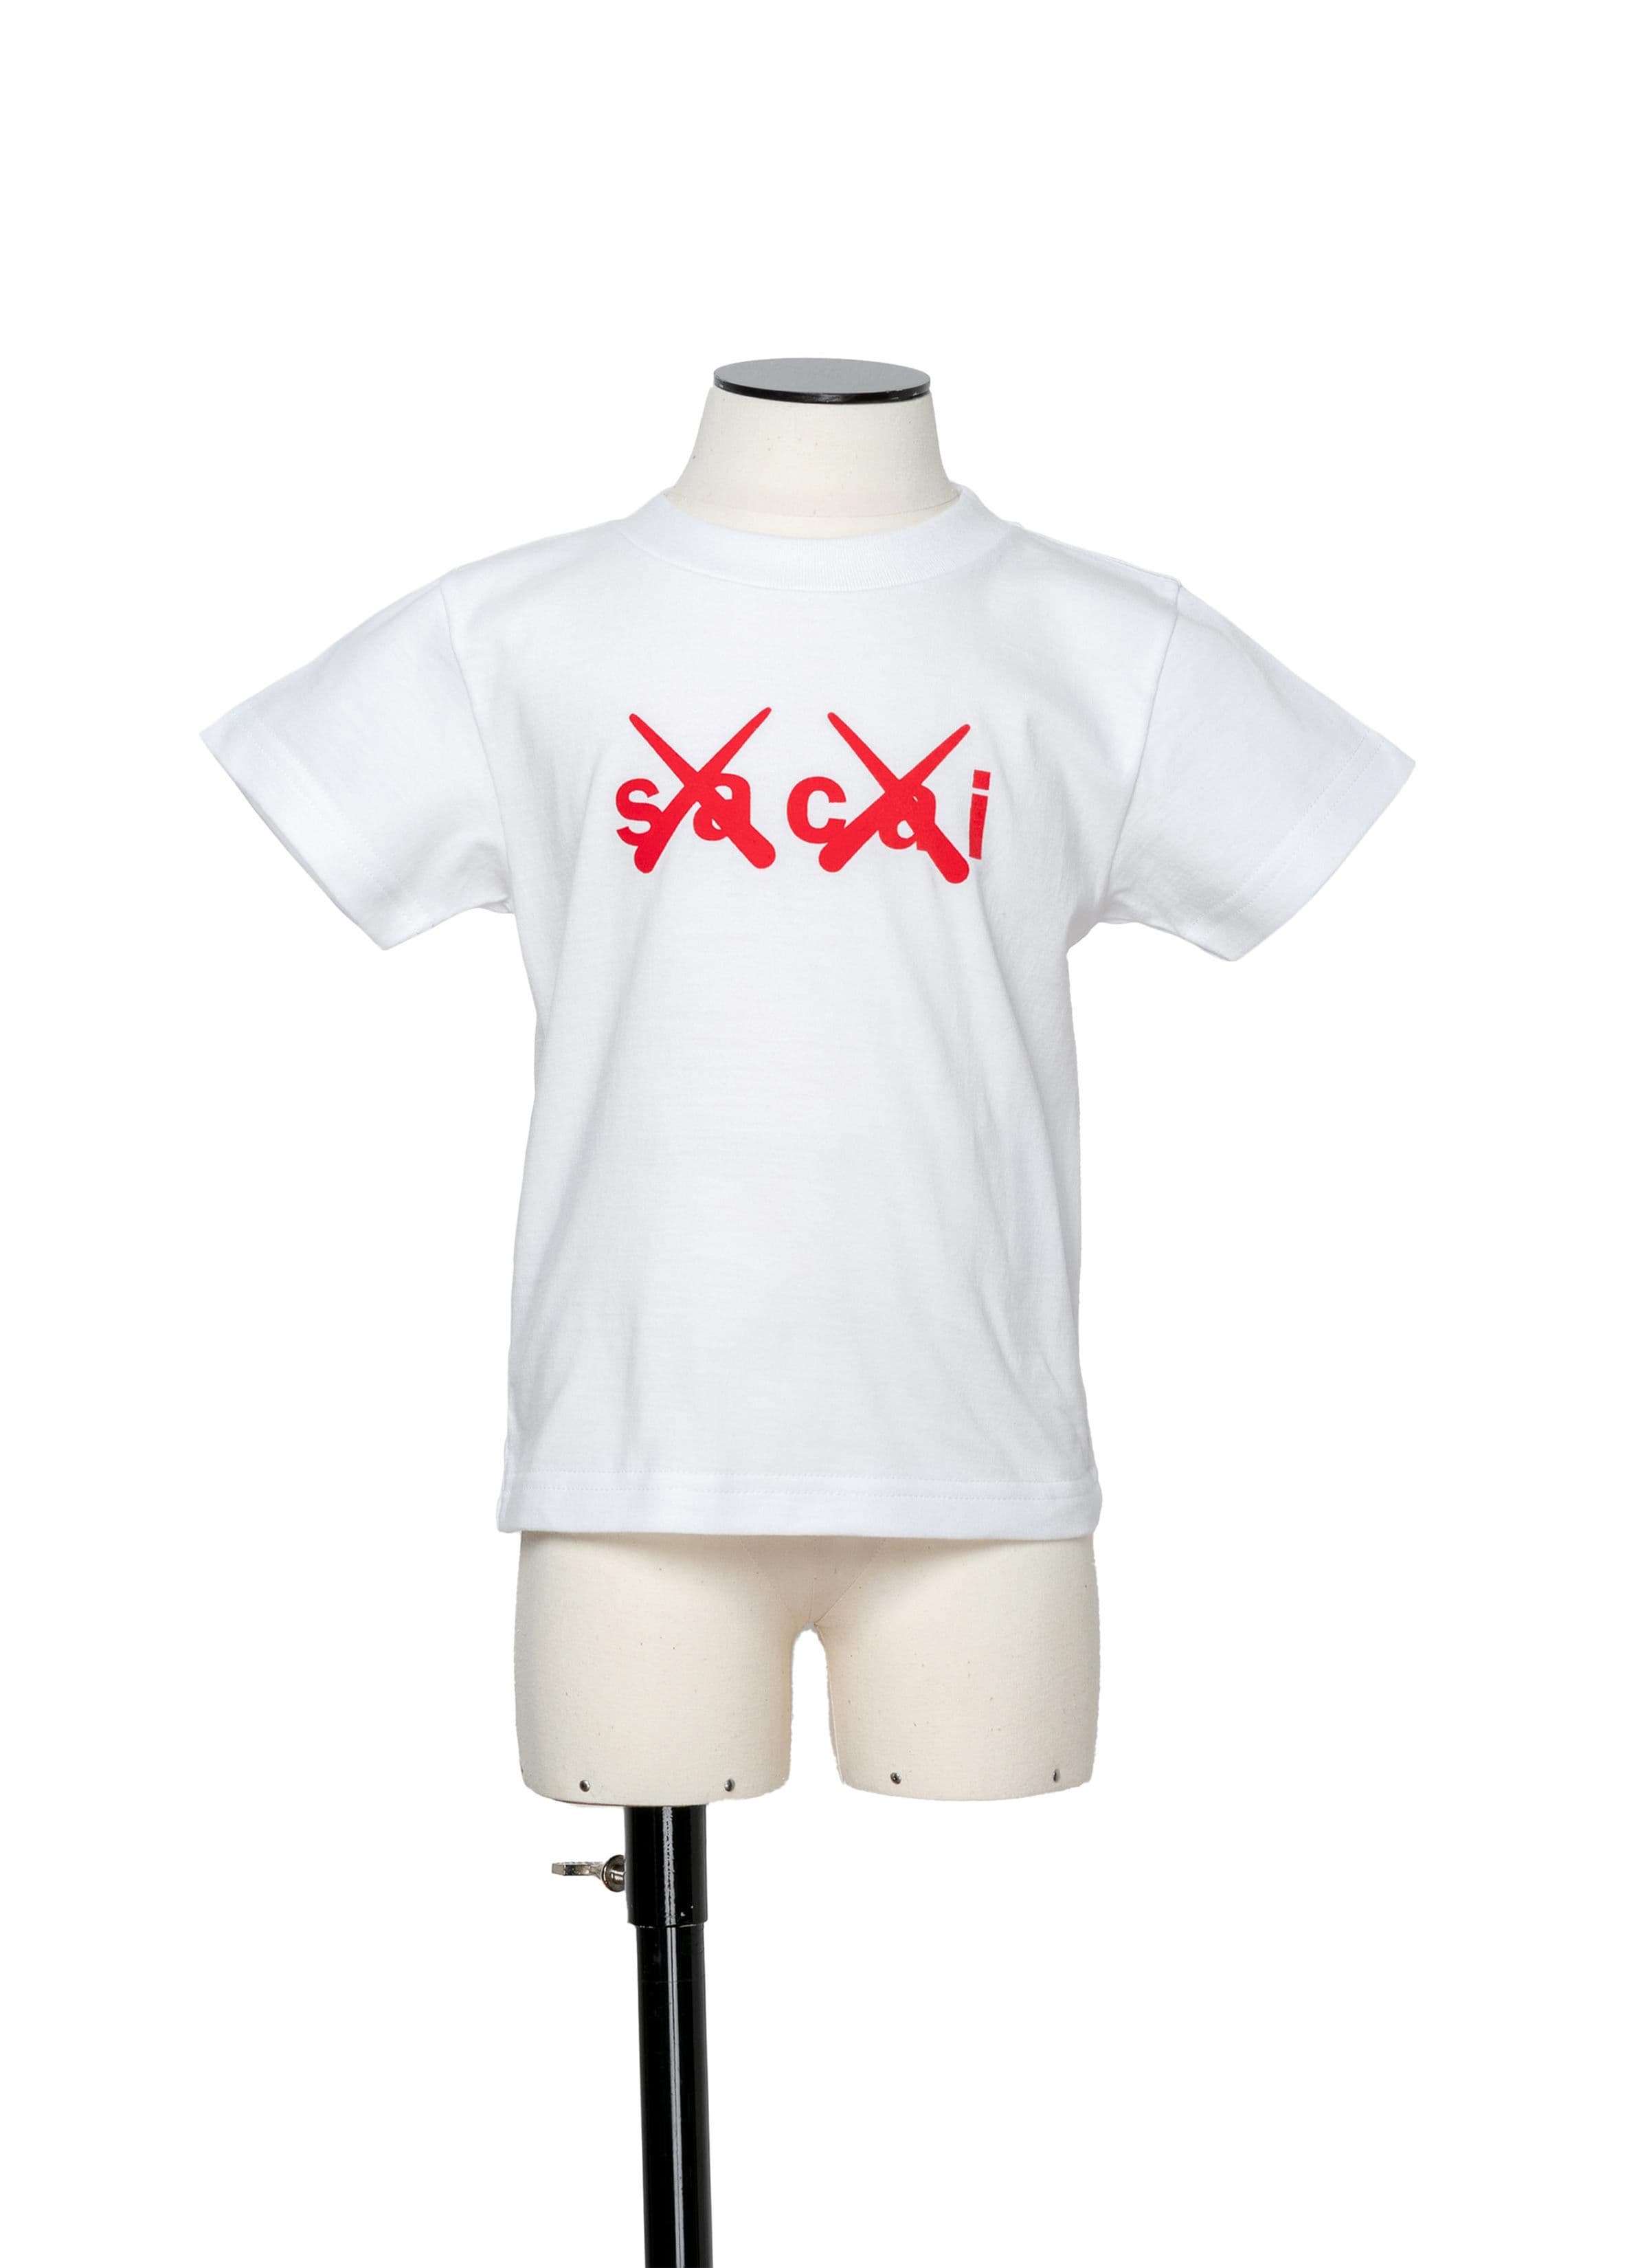 sacai x KAWS / Flock Print T-Shirt 詳細画像 WHITE×RED 1